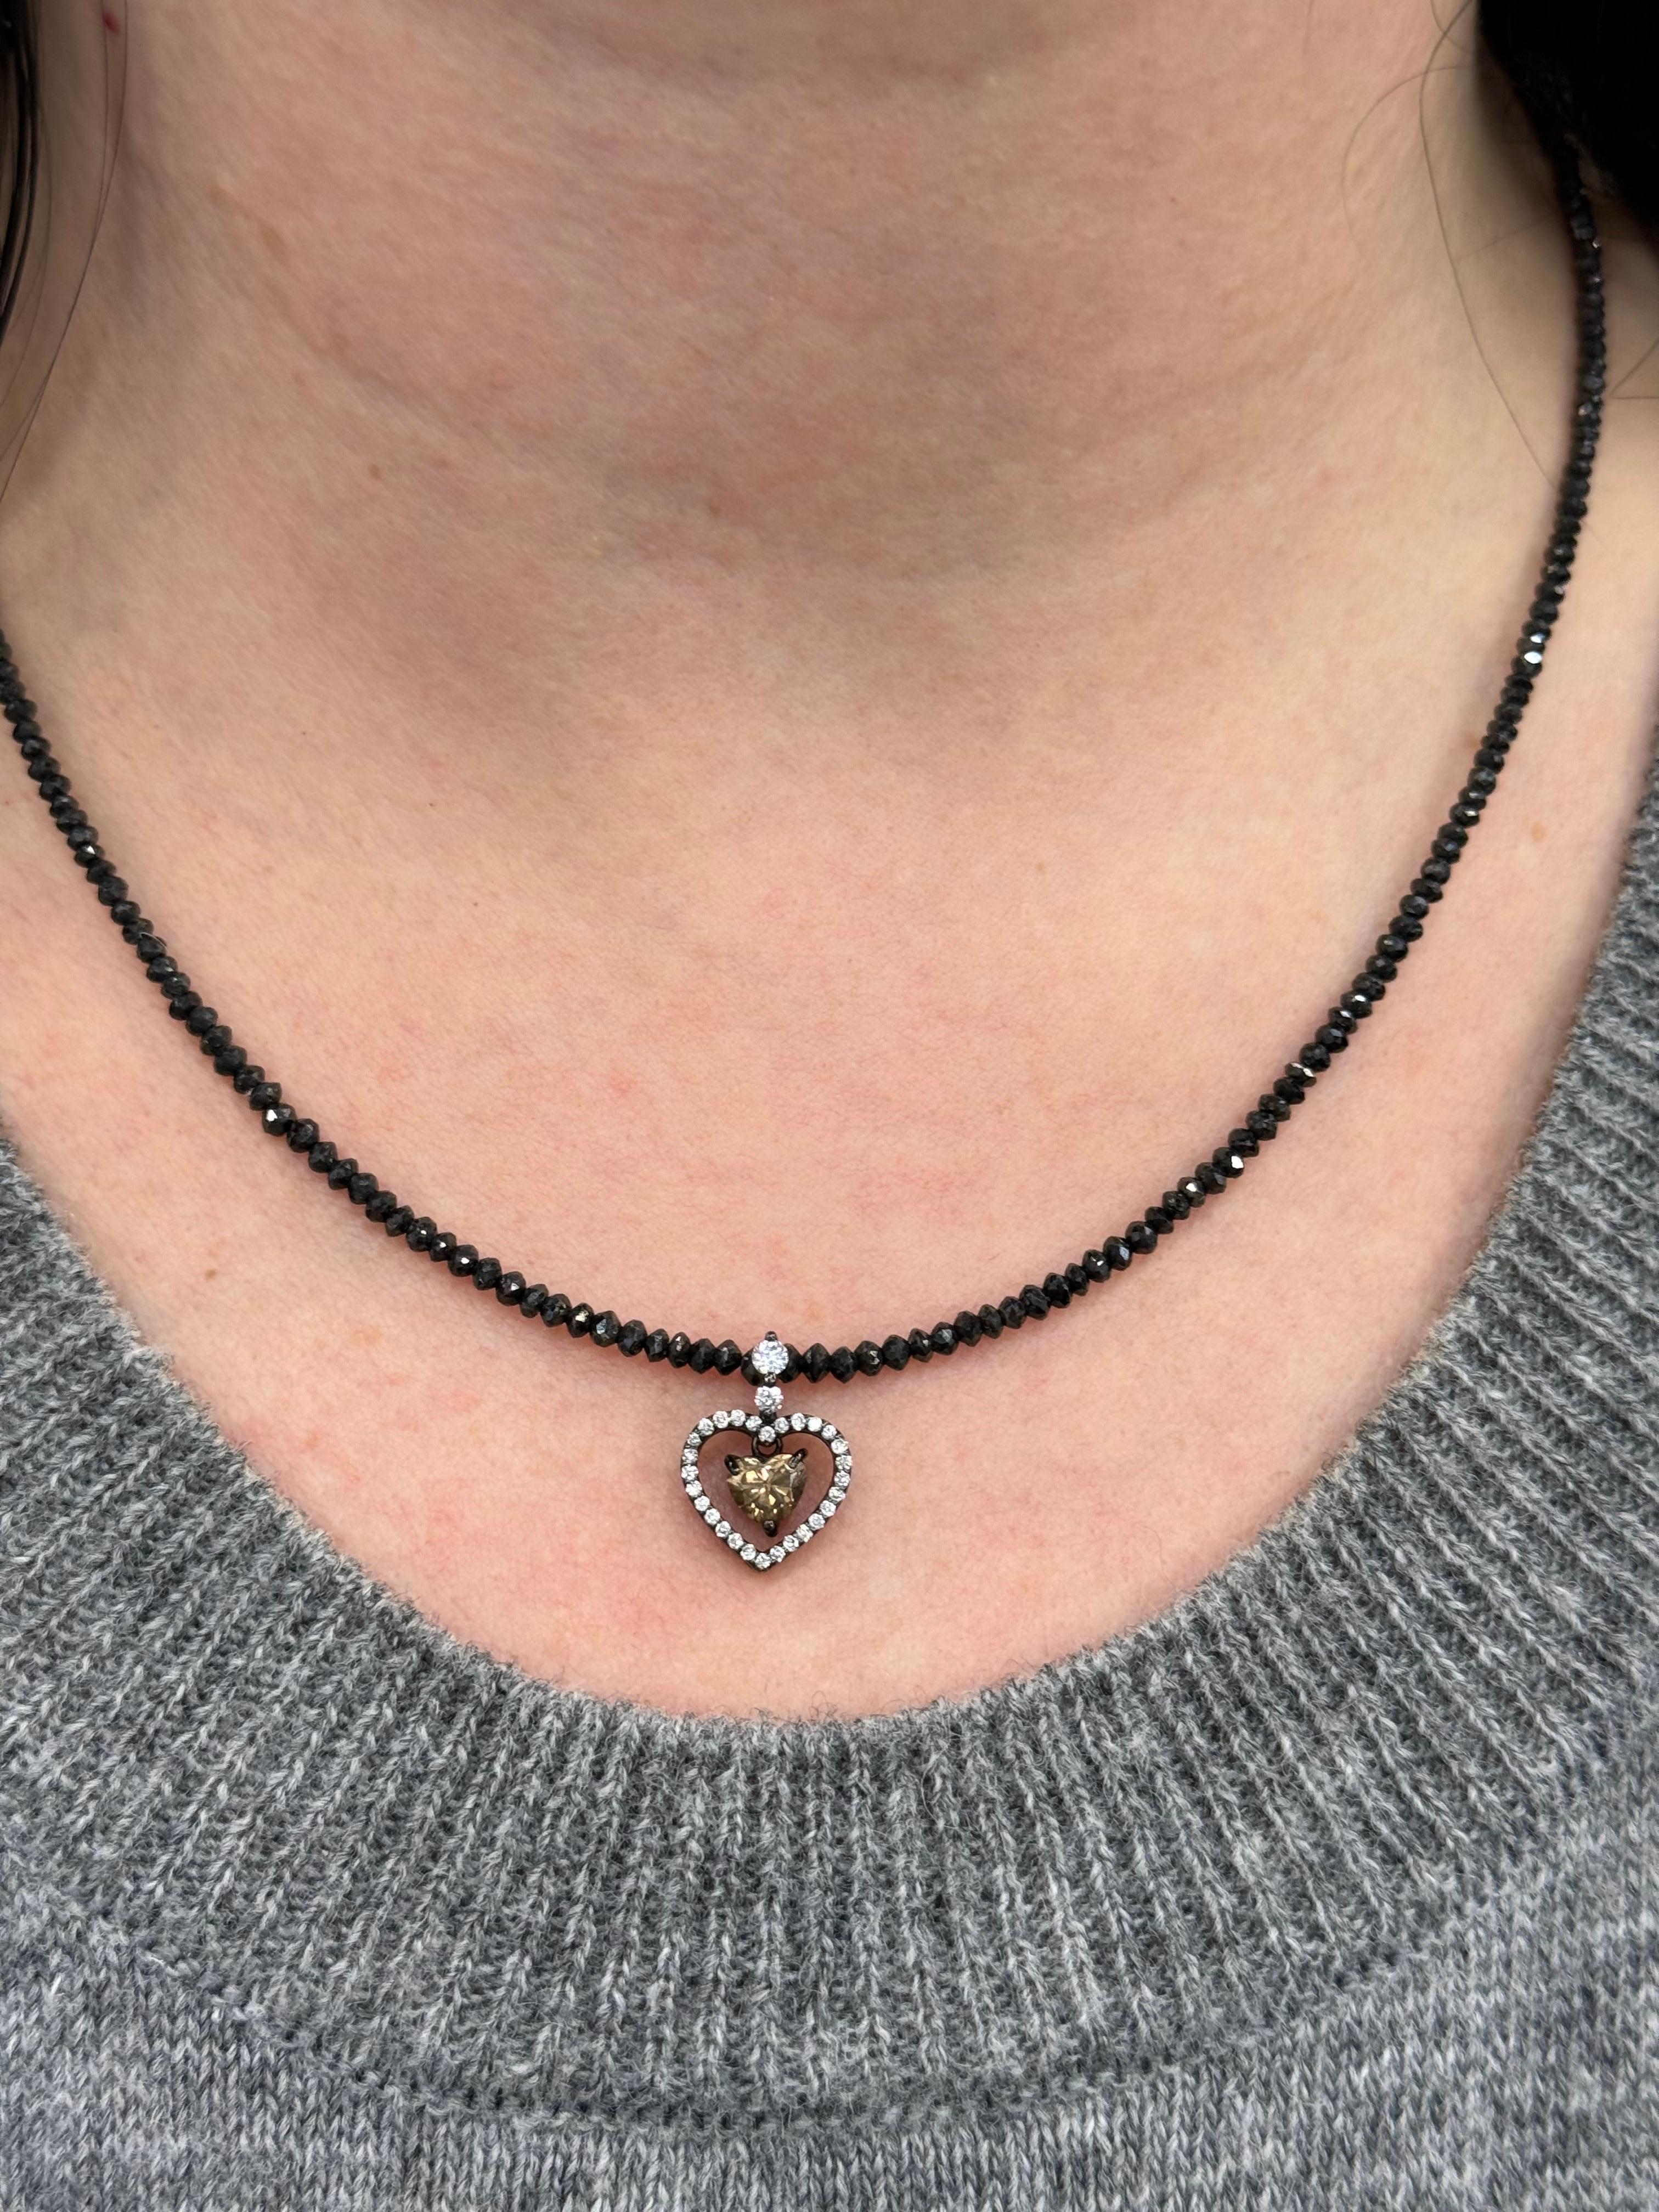 Women's Heart Shape Brown Diamond Beaded Necklace with White & Black Diamond 15.70 CTTW